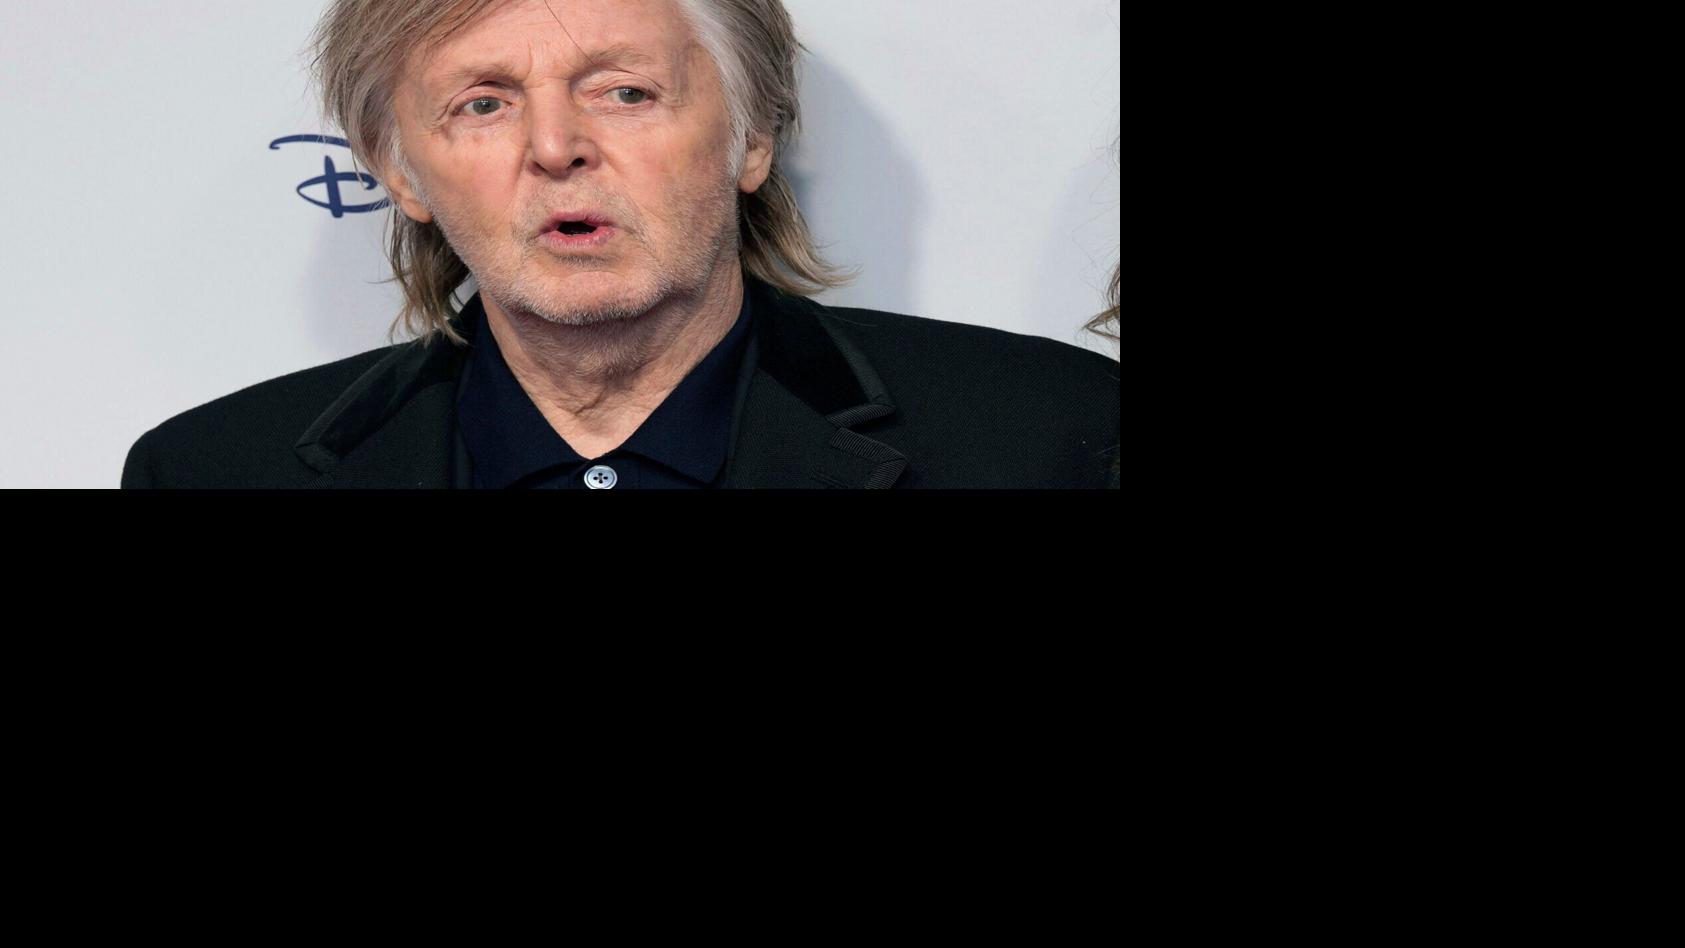 AI helped create ‘the last Beatles record,’ Paul McCartney says